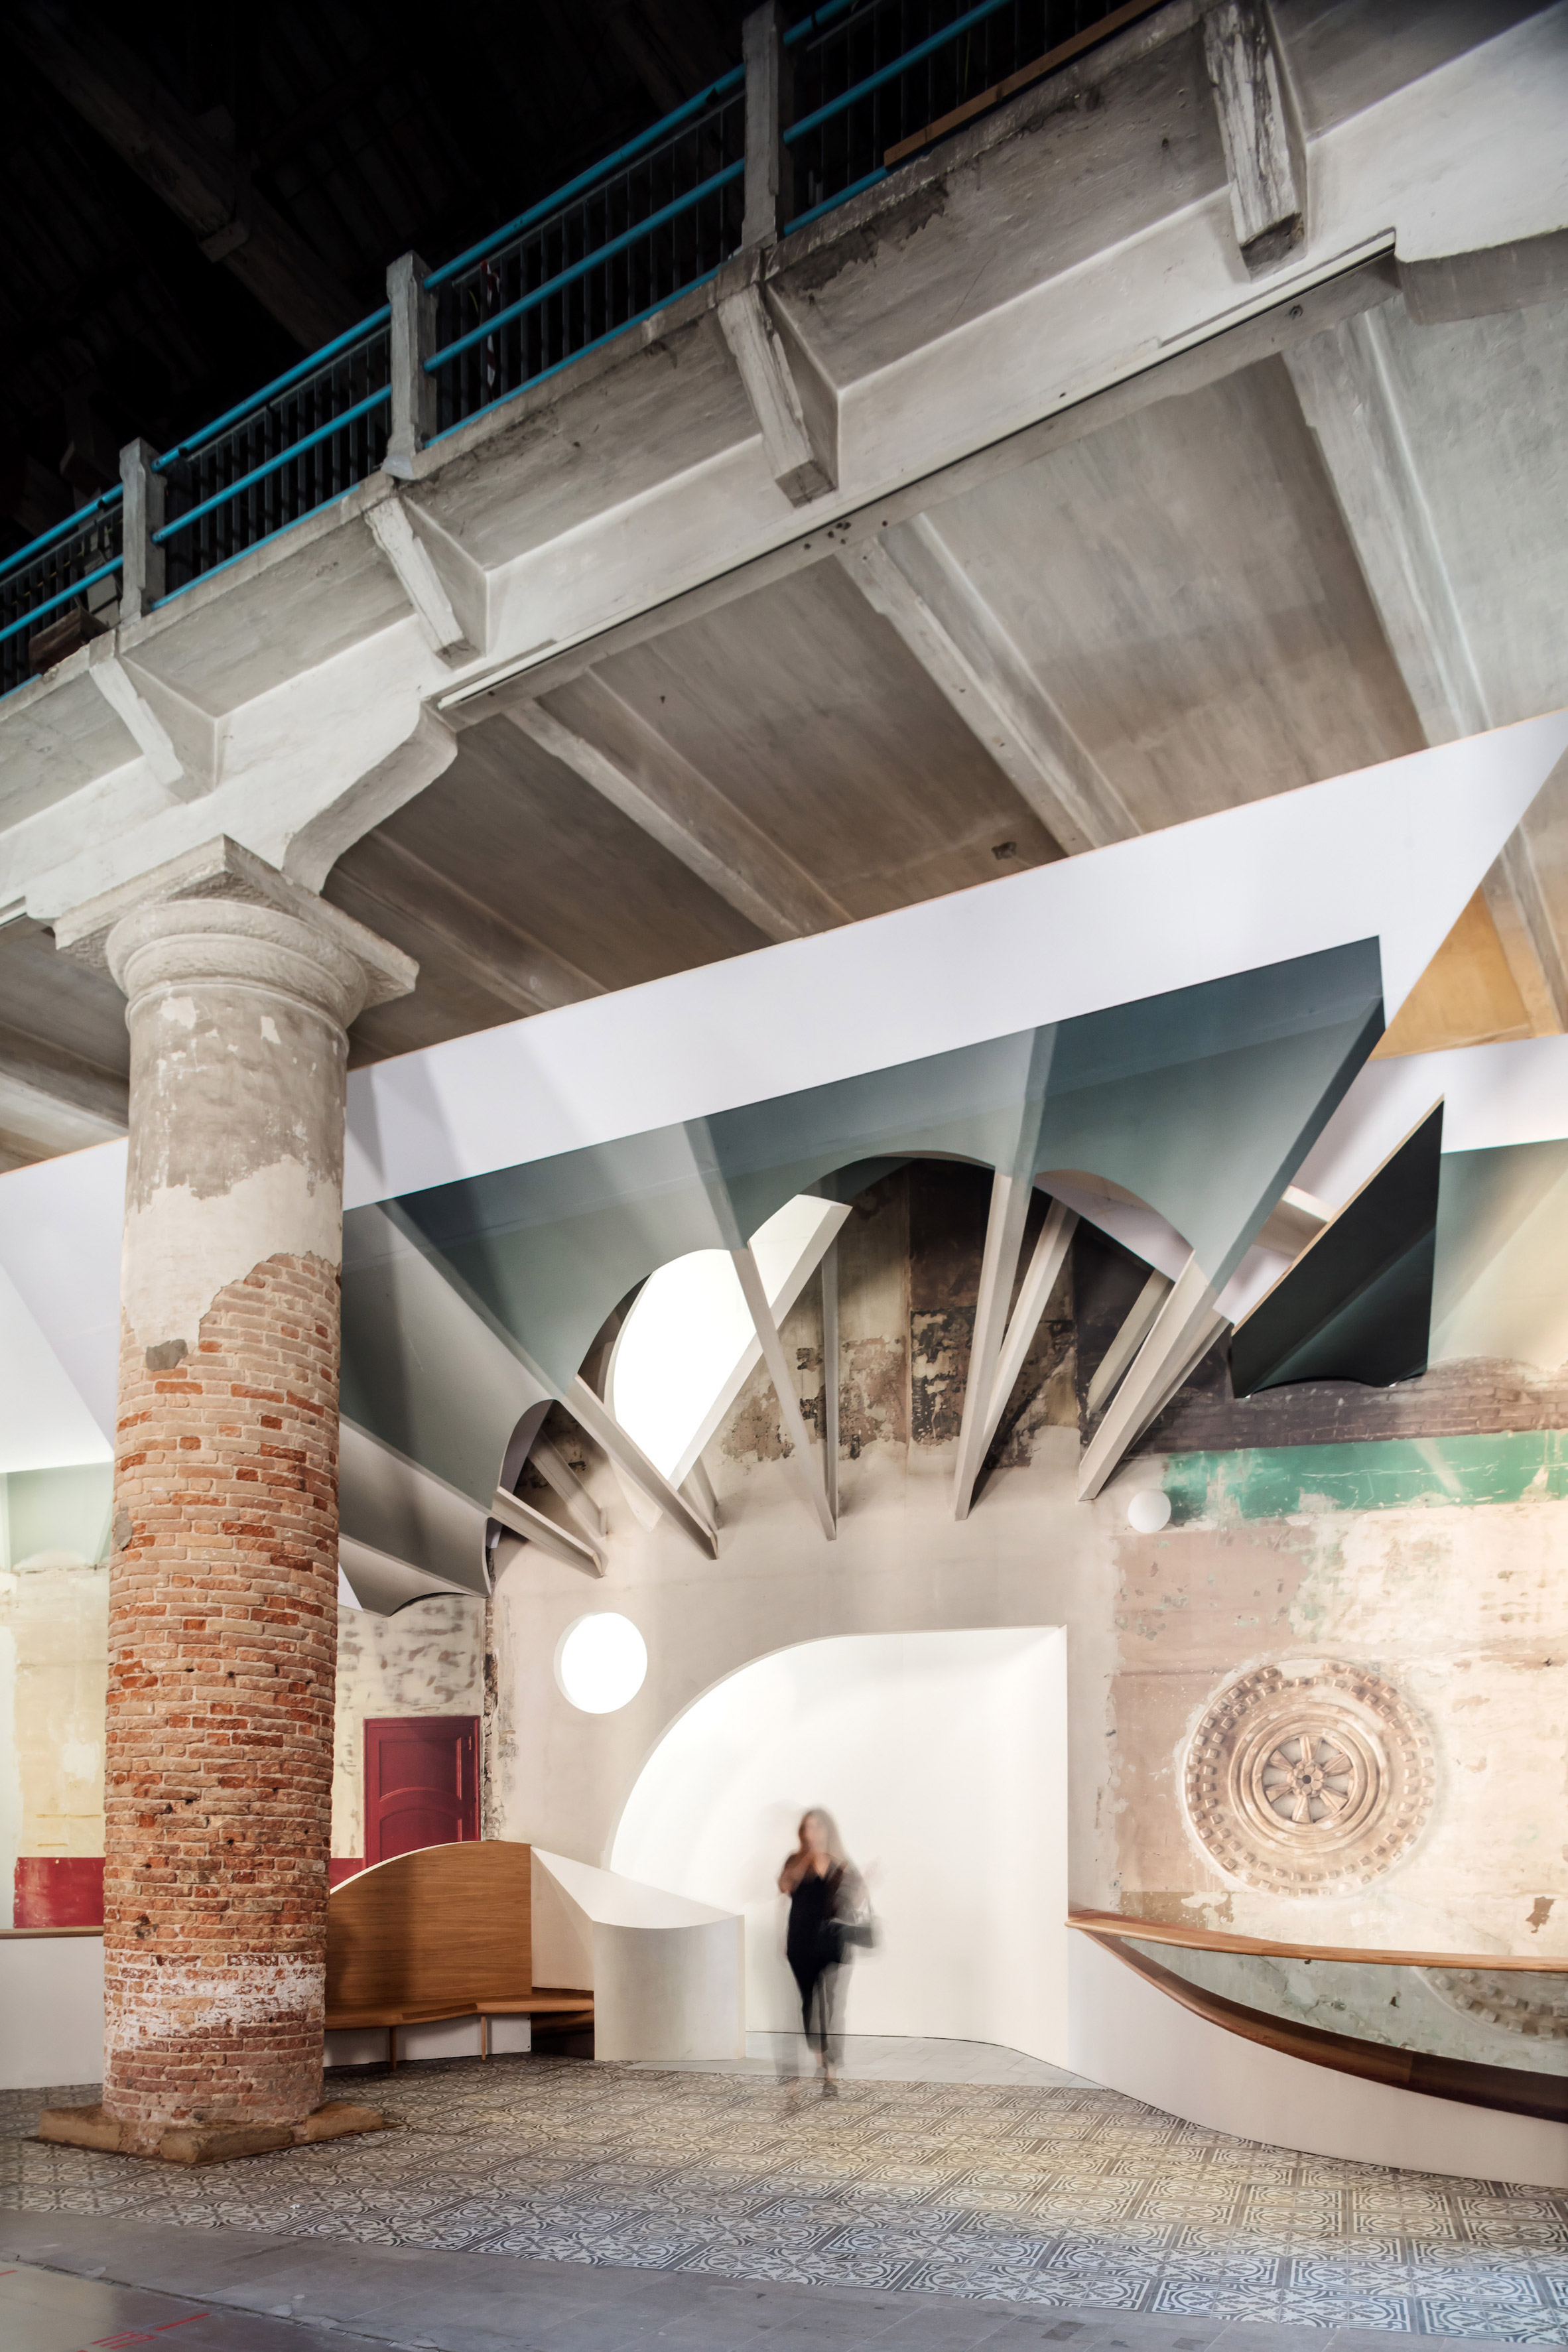 Sala Beckett theatre at Venice Architecture Biennale by Flores & Prats